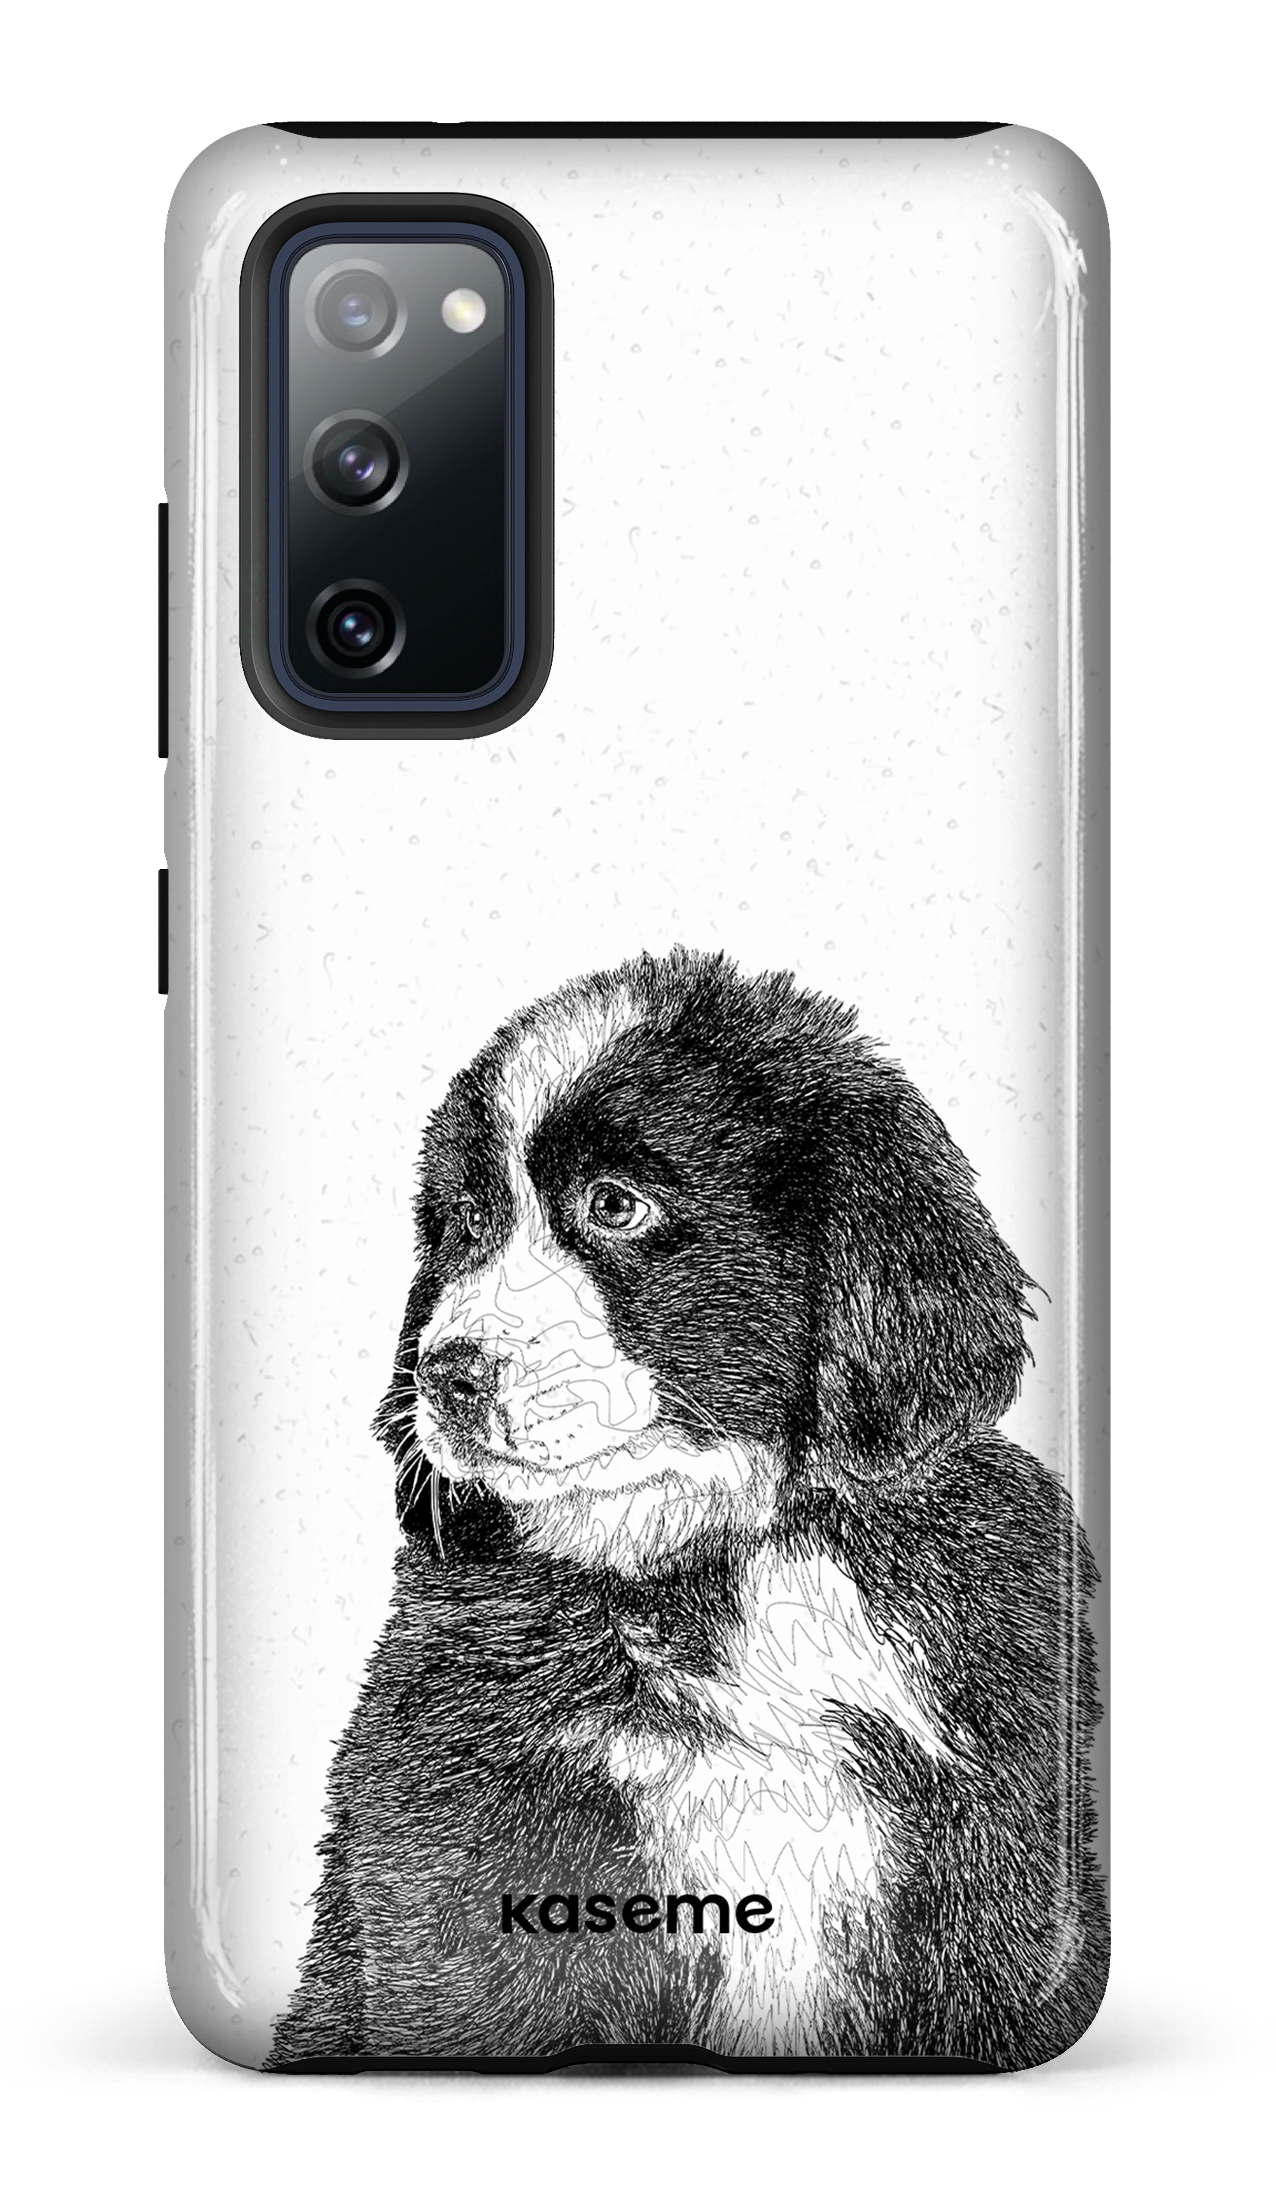 Bernese Mountain Dog - Galaxy S20 FE